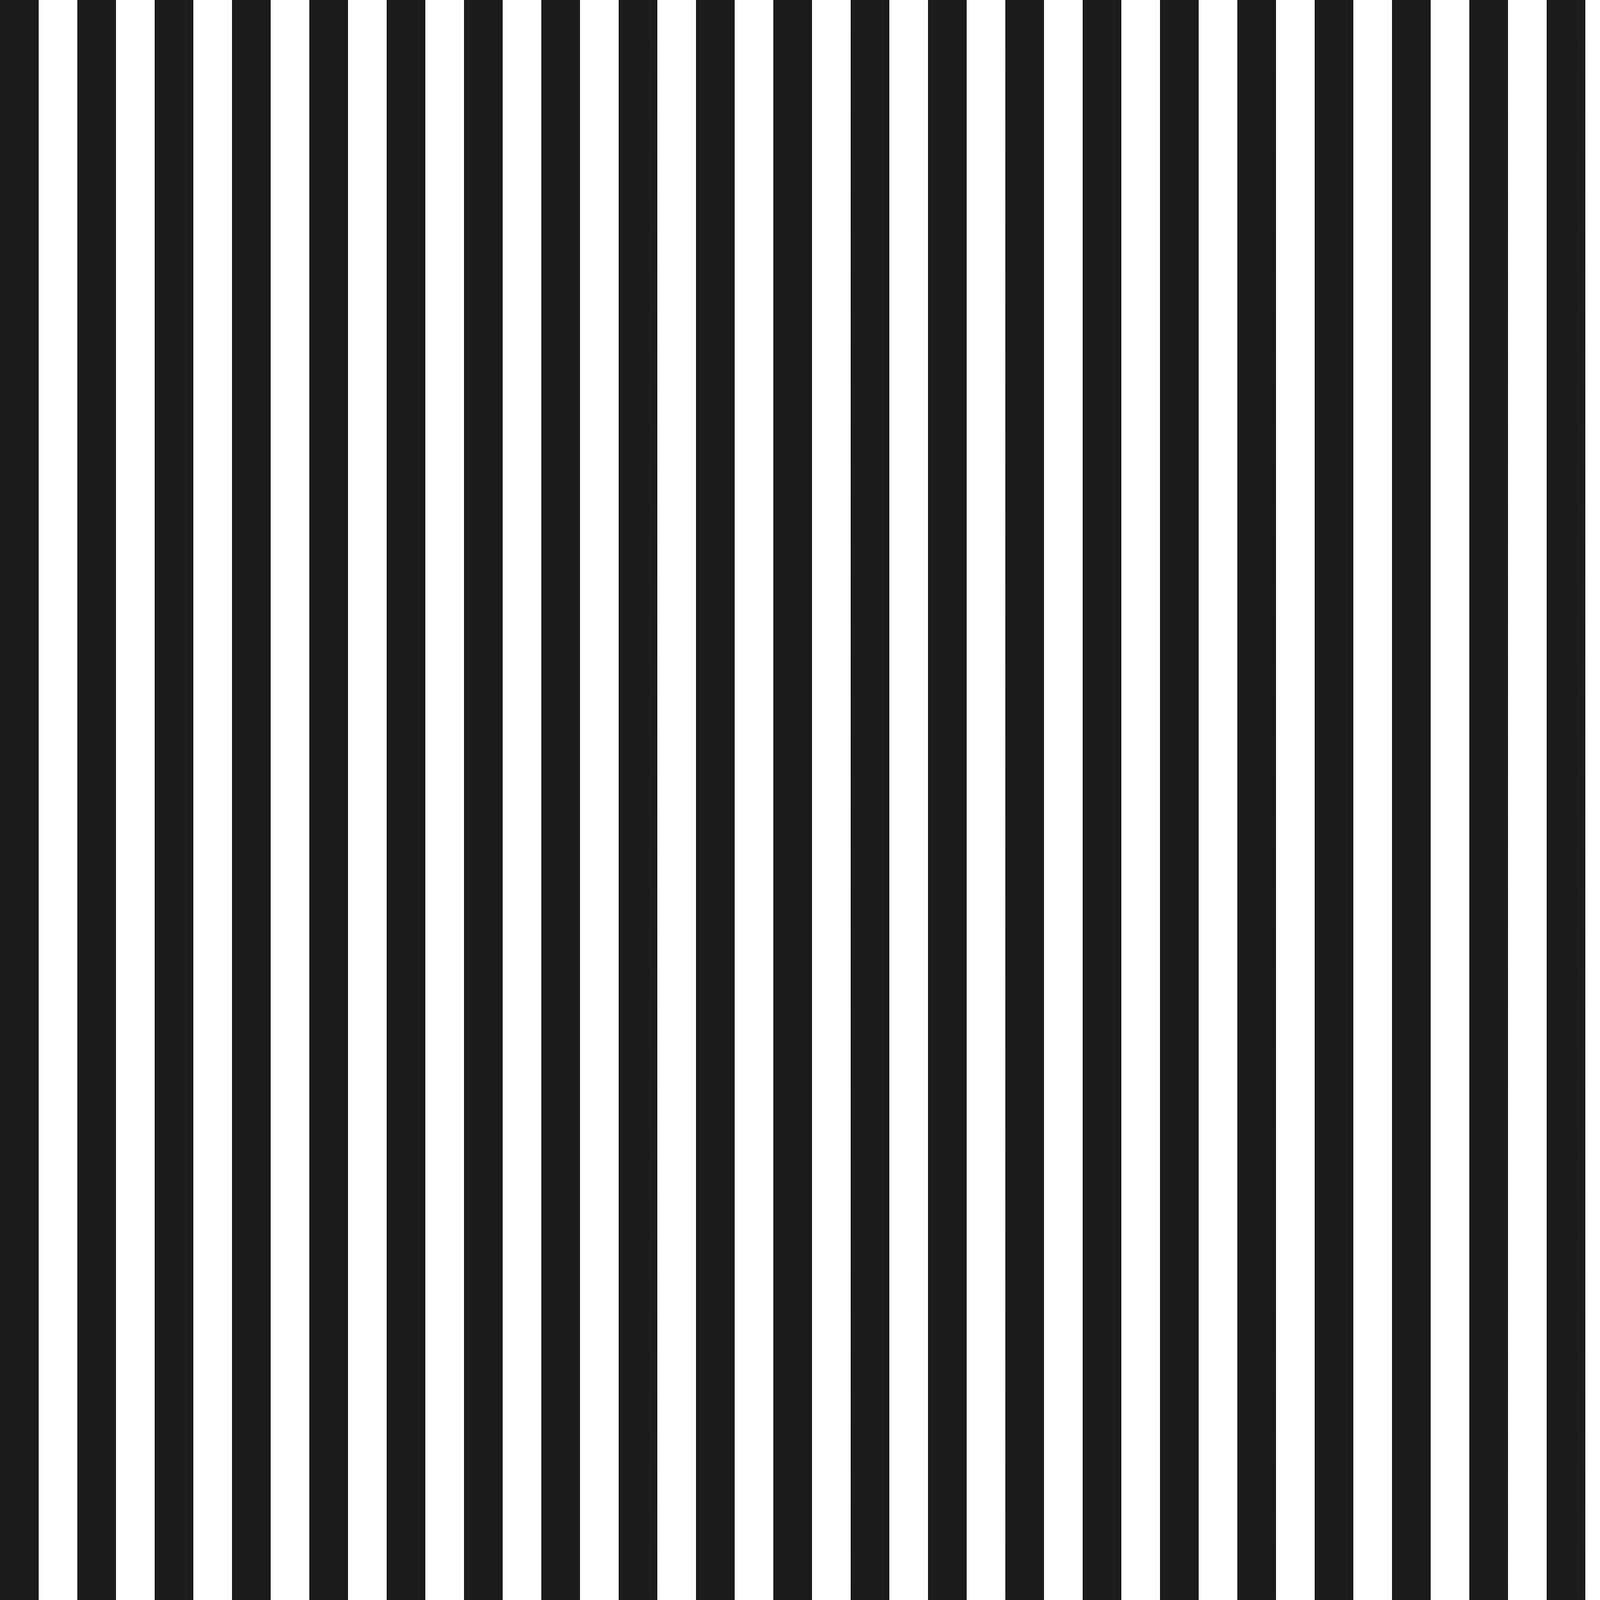 [49+] Black and White Stripe Wallpaper | WallpaperSafari.com